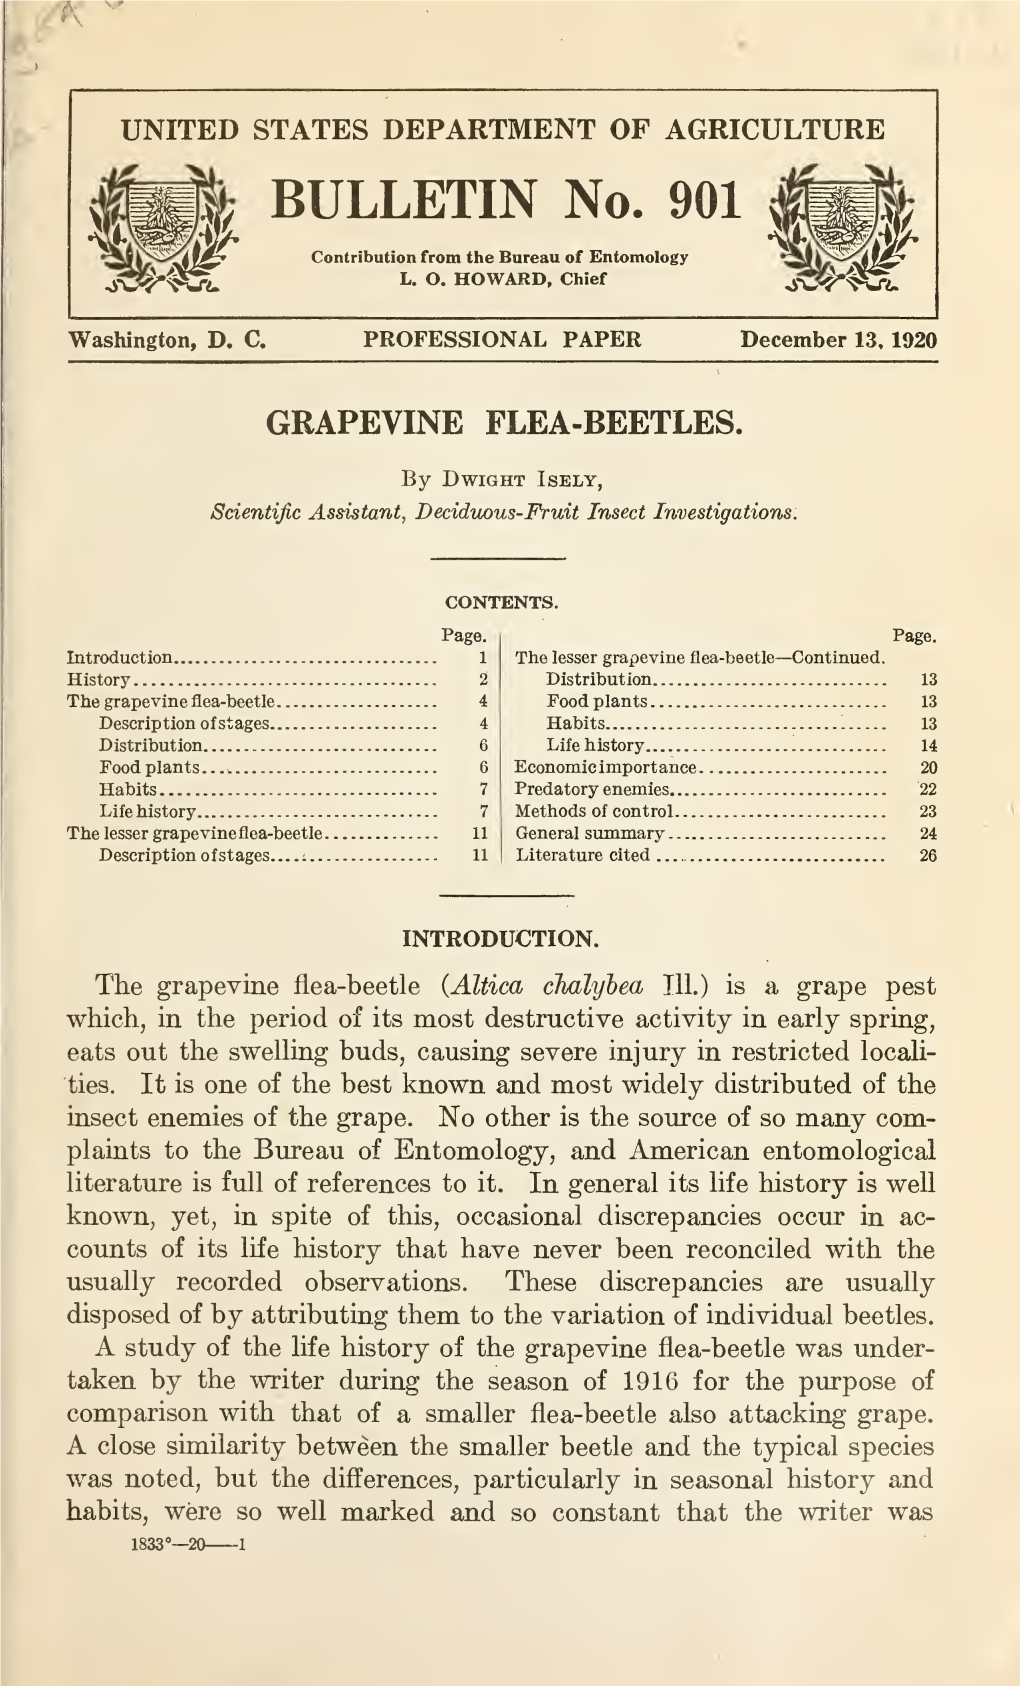 Grapevine Flea-Beetles